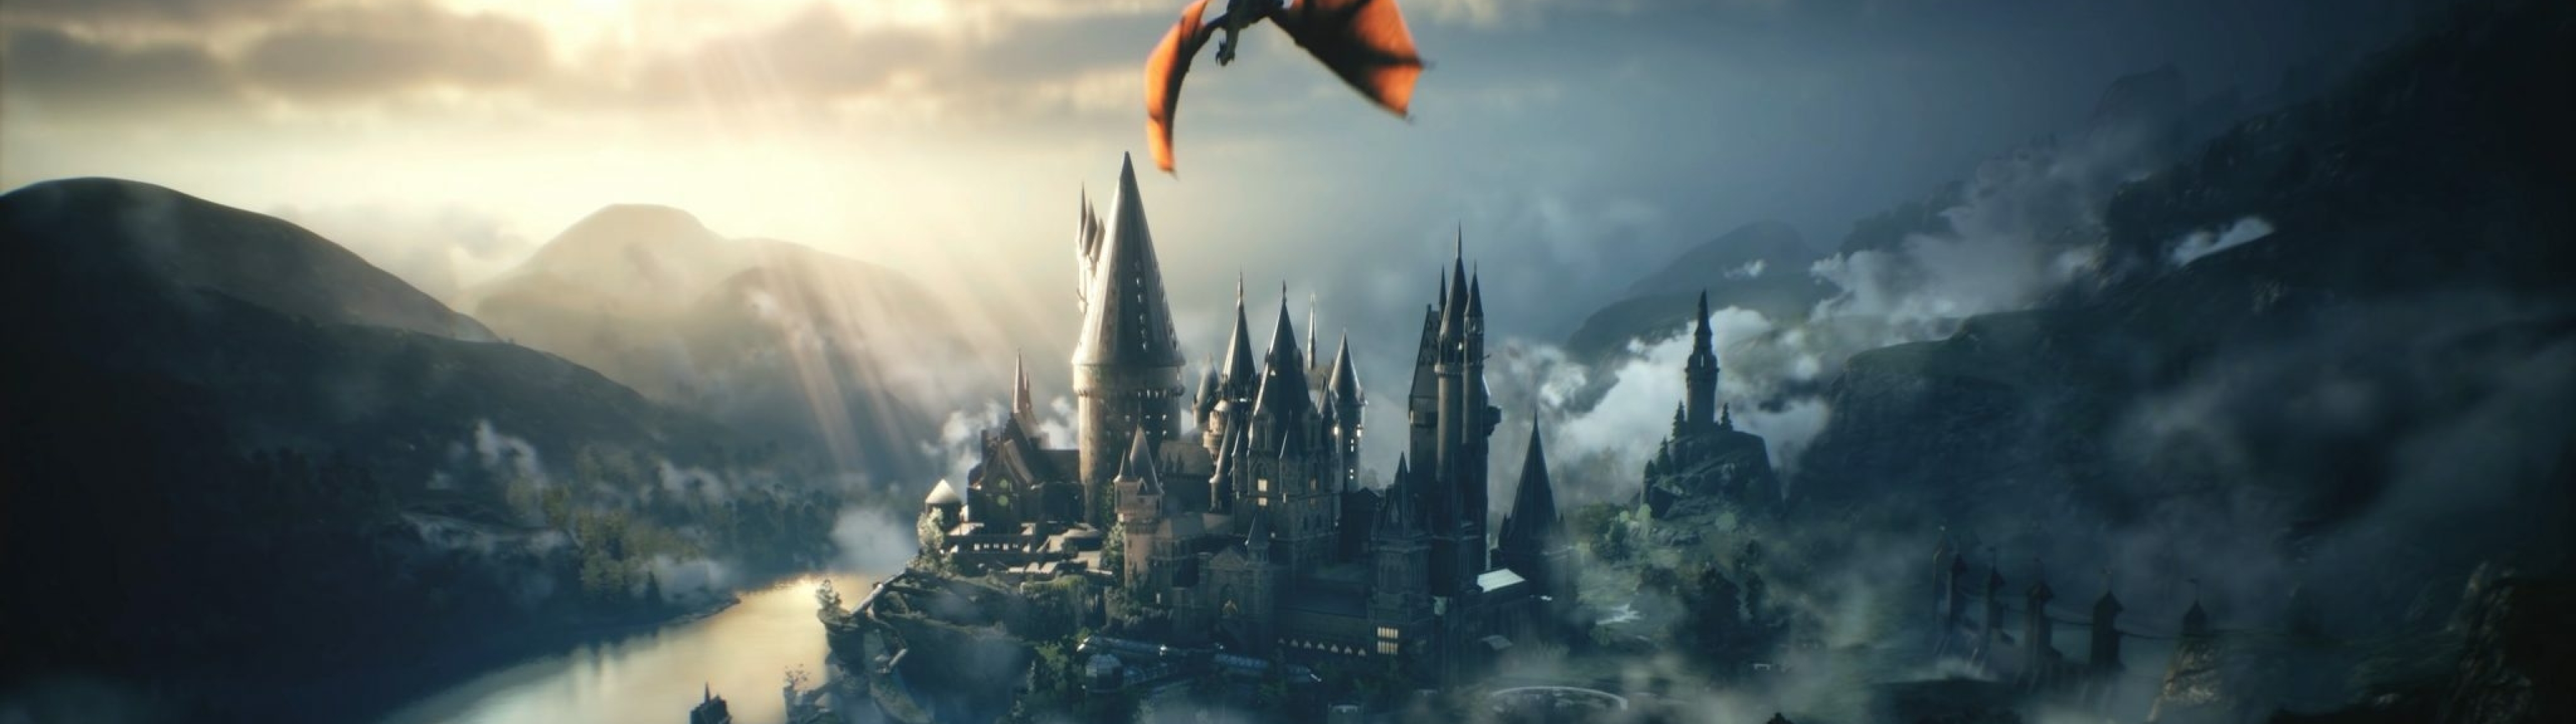 hogwarts legacy wallpaper iphone